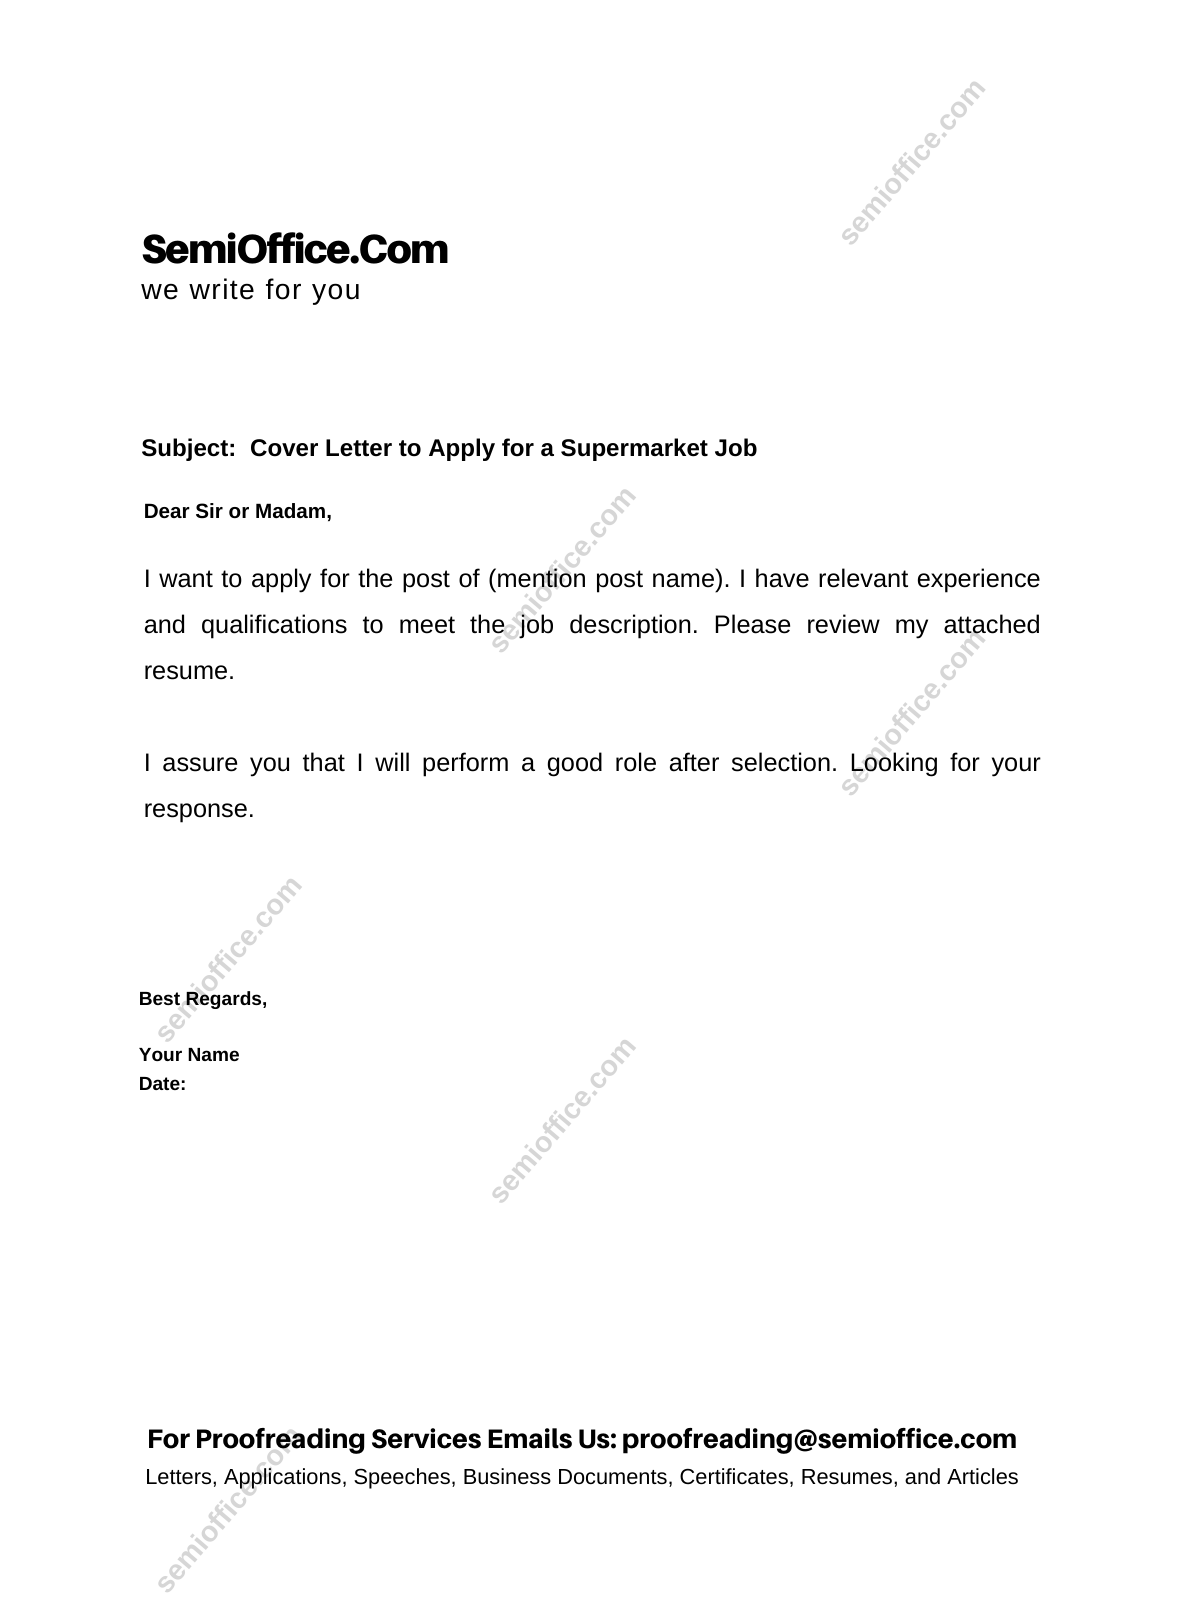 cover letter to supermarket job